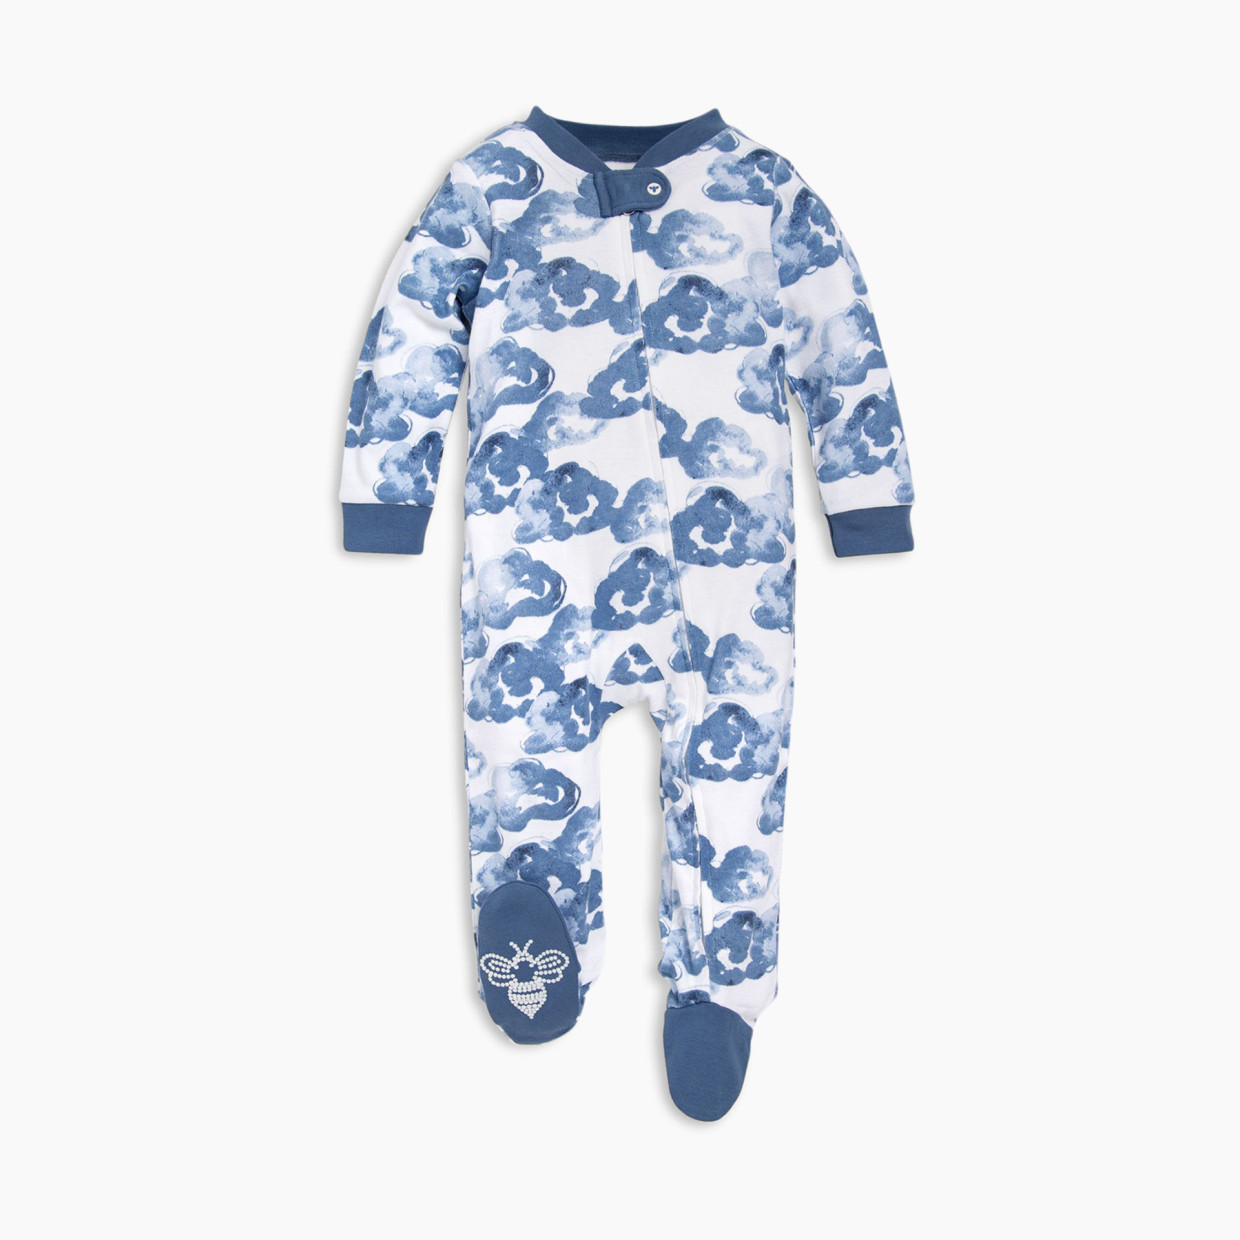 Burt's Bees Baby Organic Sleep & Play Footie Pajamas - Moonlight Clouds, 6-9 Months.